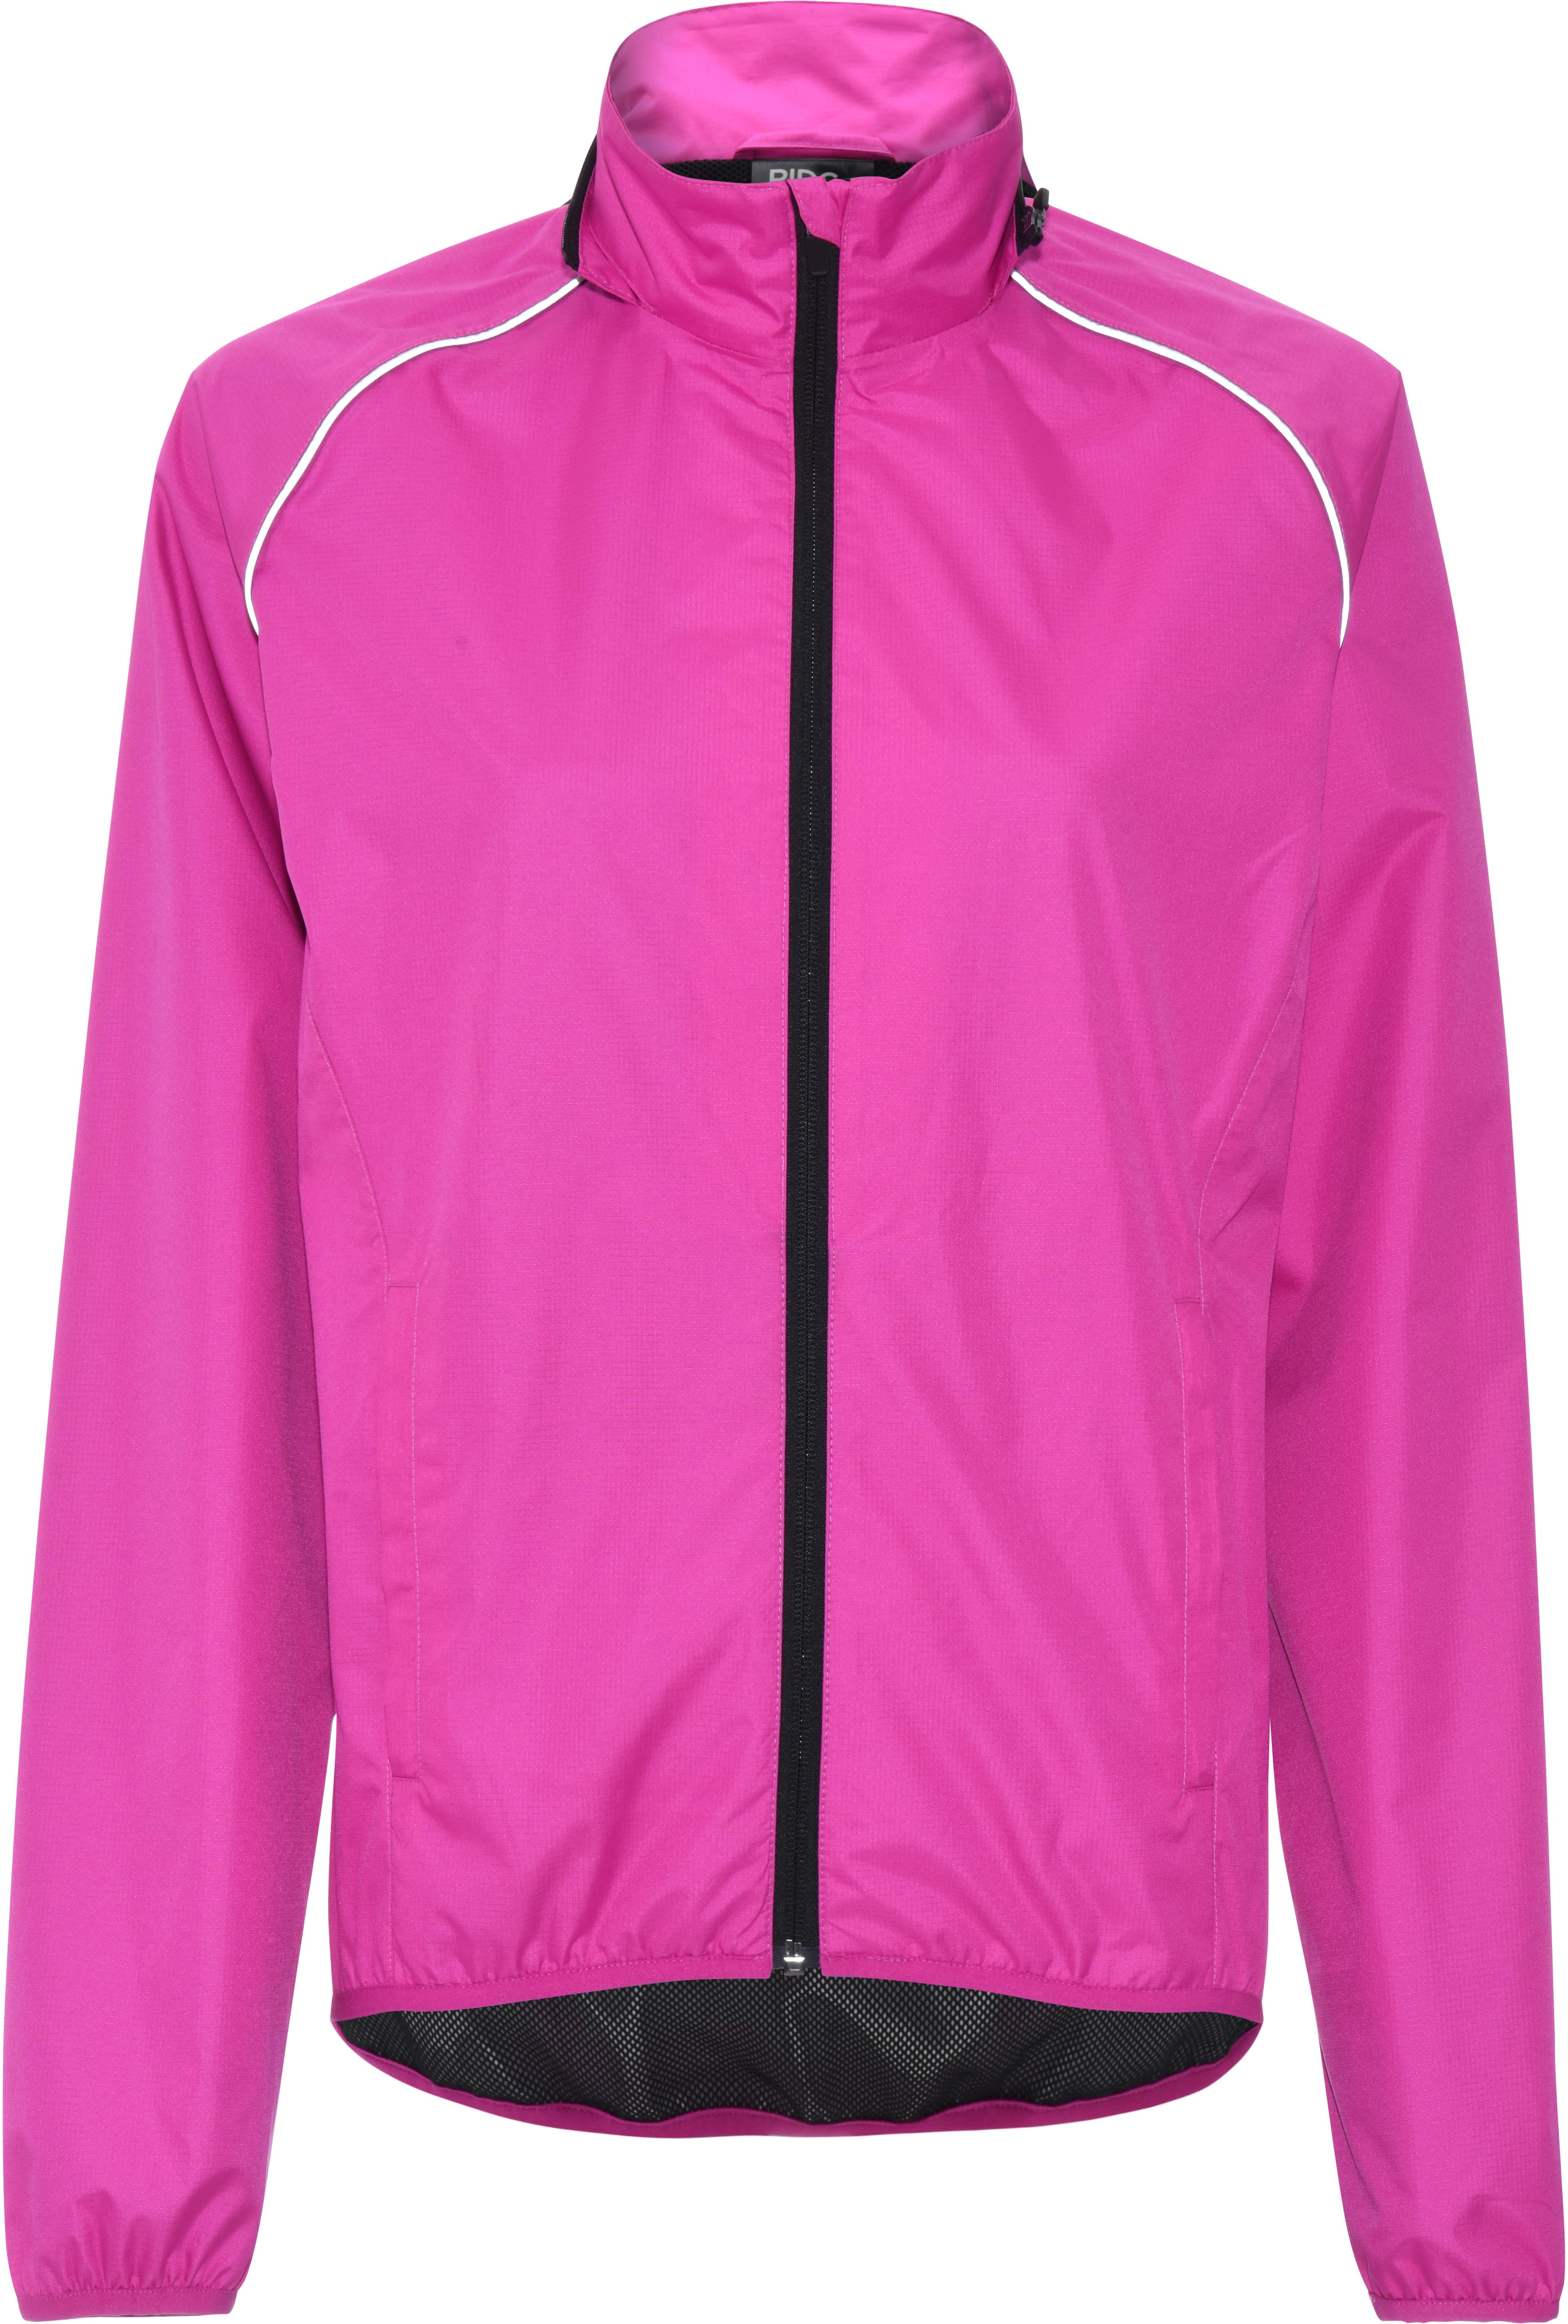 Ridge Womens Waterproof Jacket - Pink, 12